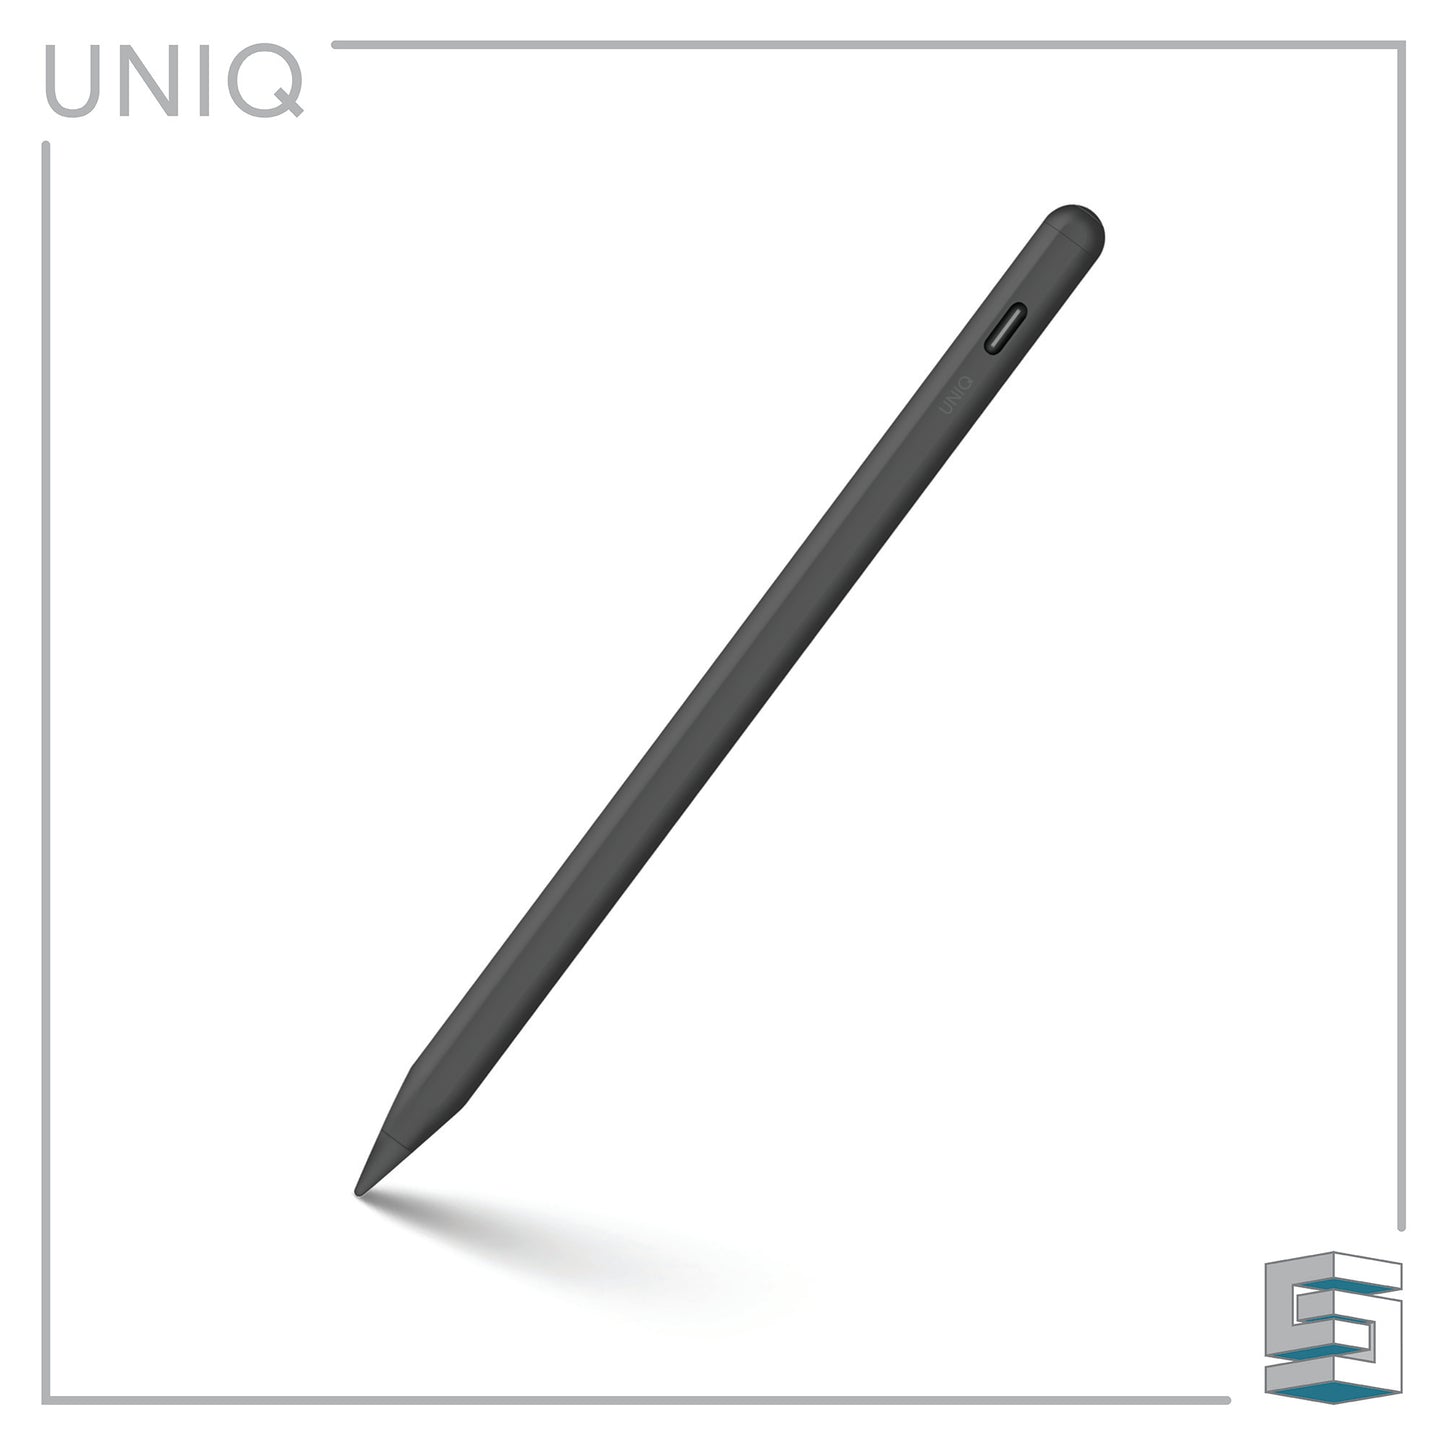 Stylus Pencil for Apple iPad - UNIQ Pixo Pro Global Synergy Concepts